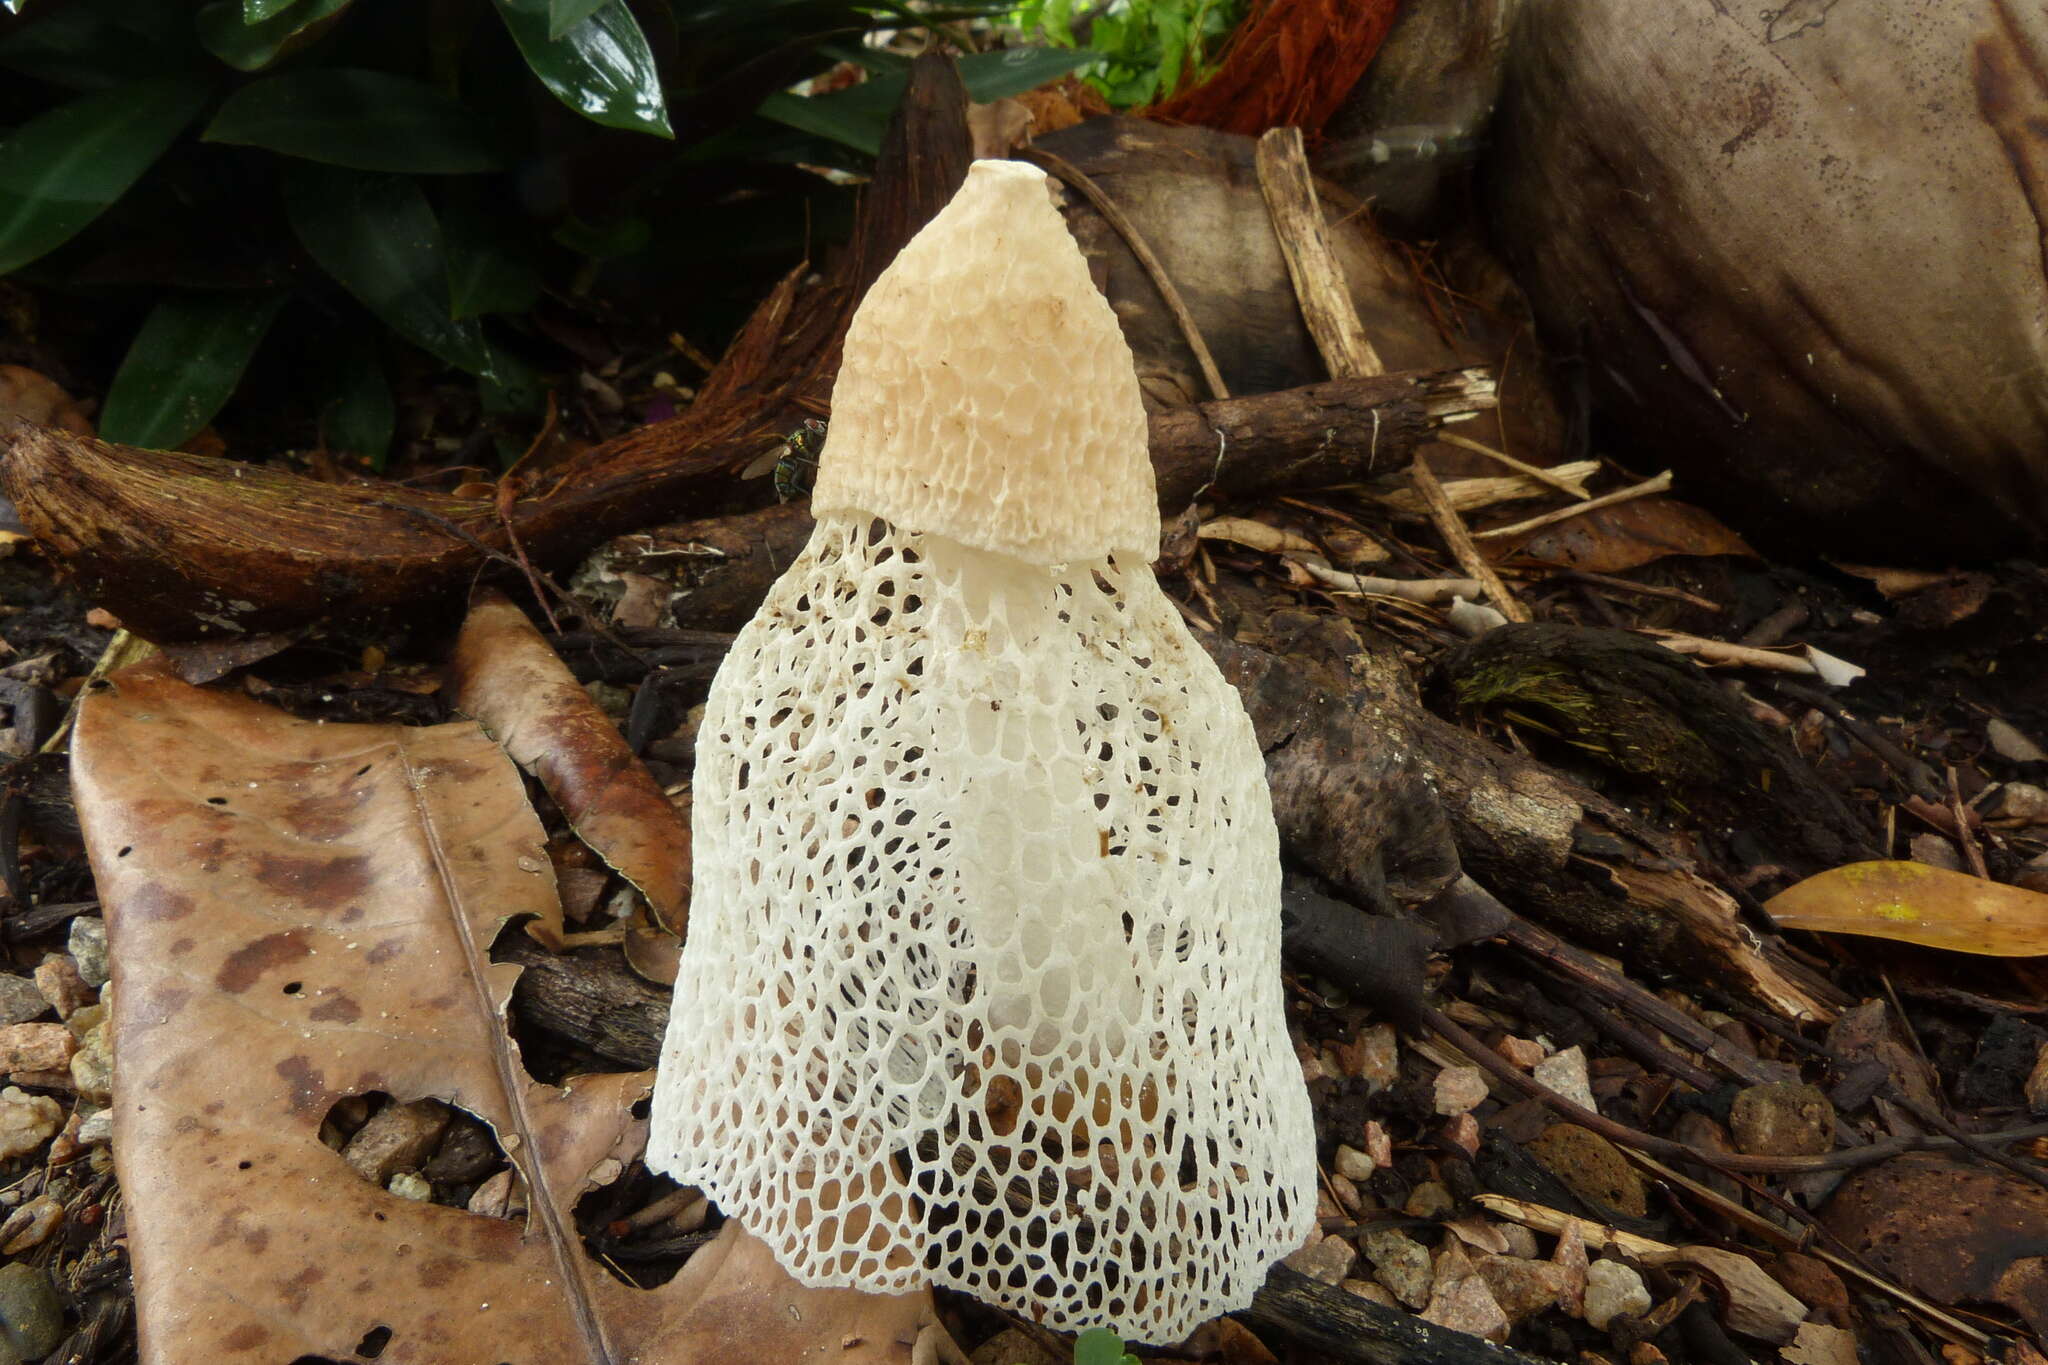 Image of Bridal veil stinkhorn